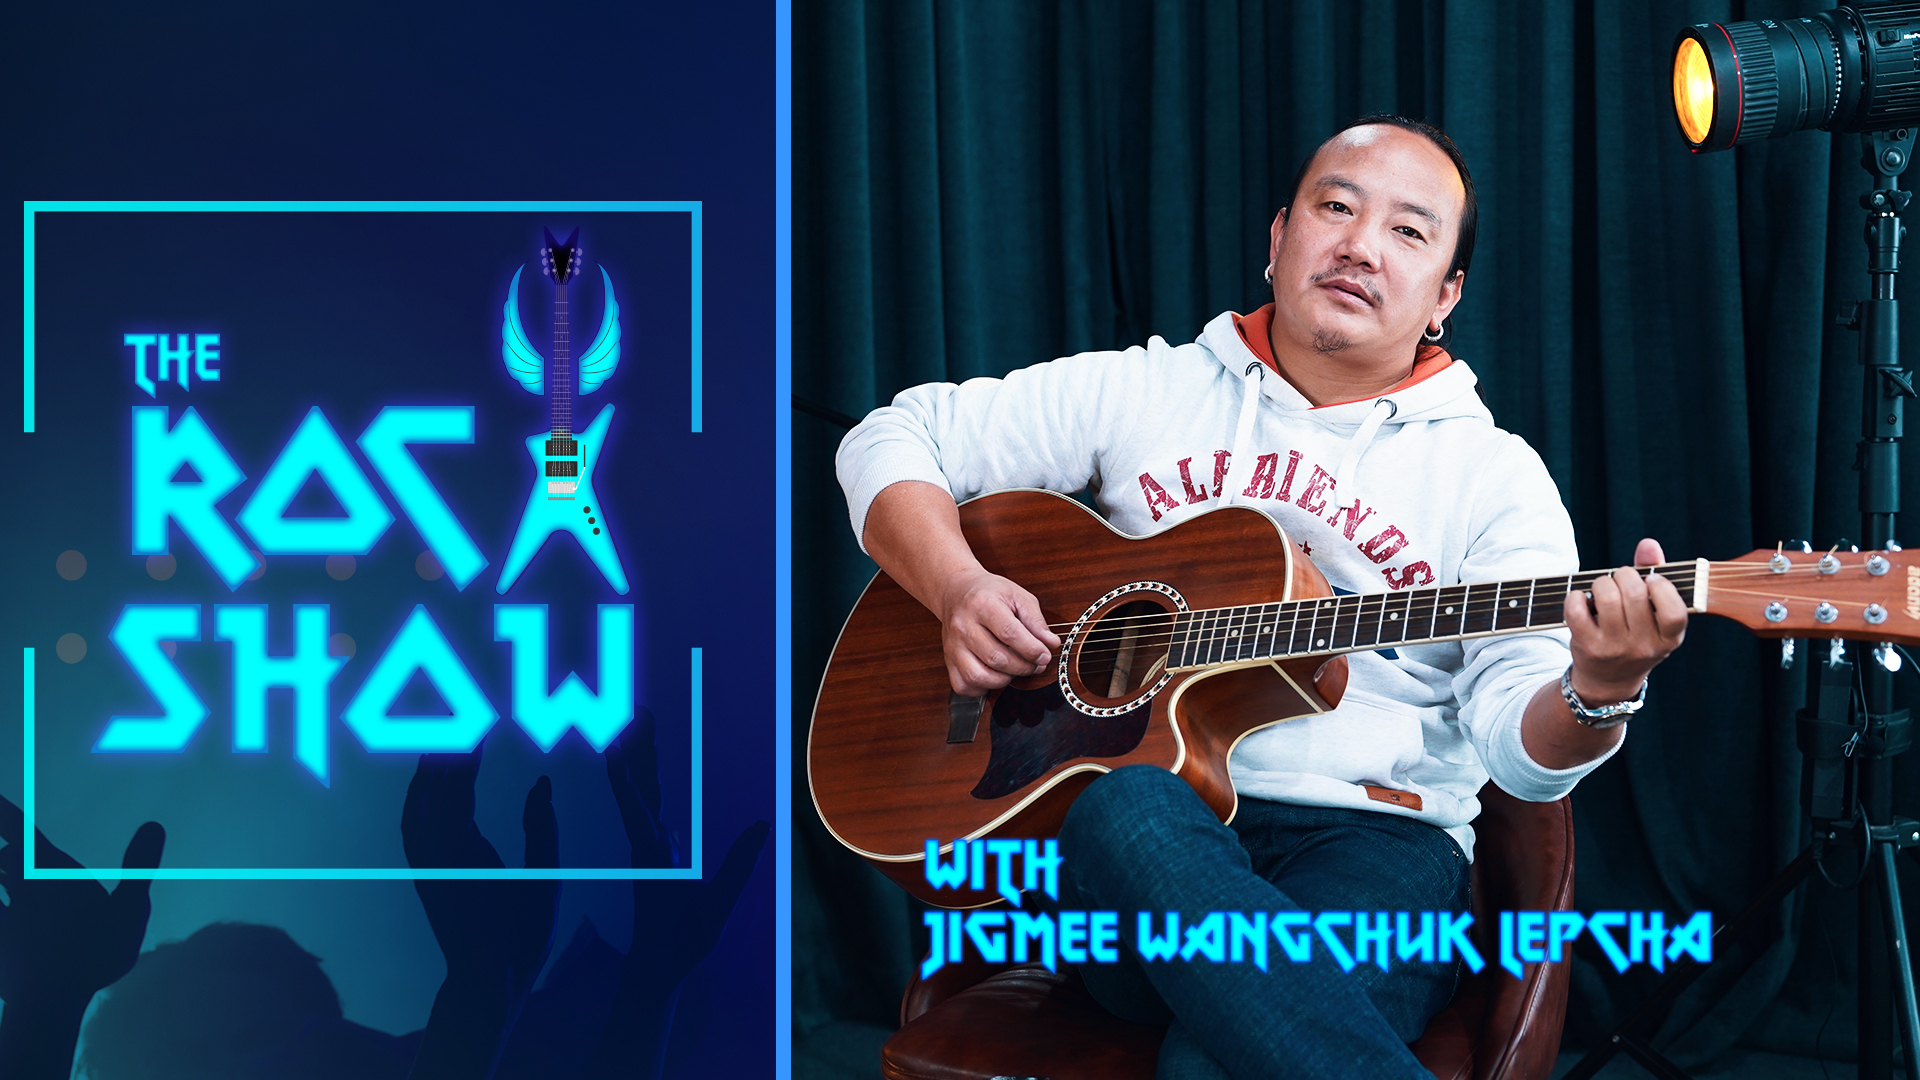 Jigmee Wangchuk Lepcha | The Rock Show - Abhishek S. Mishra